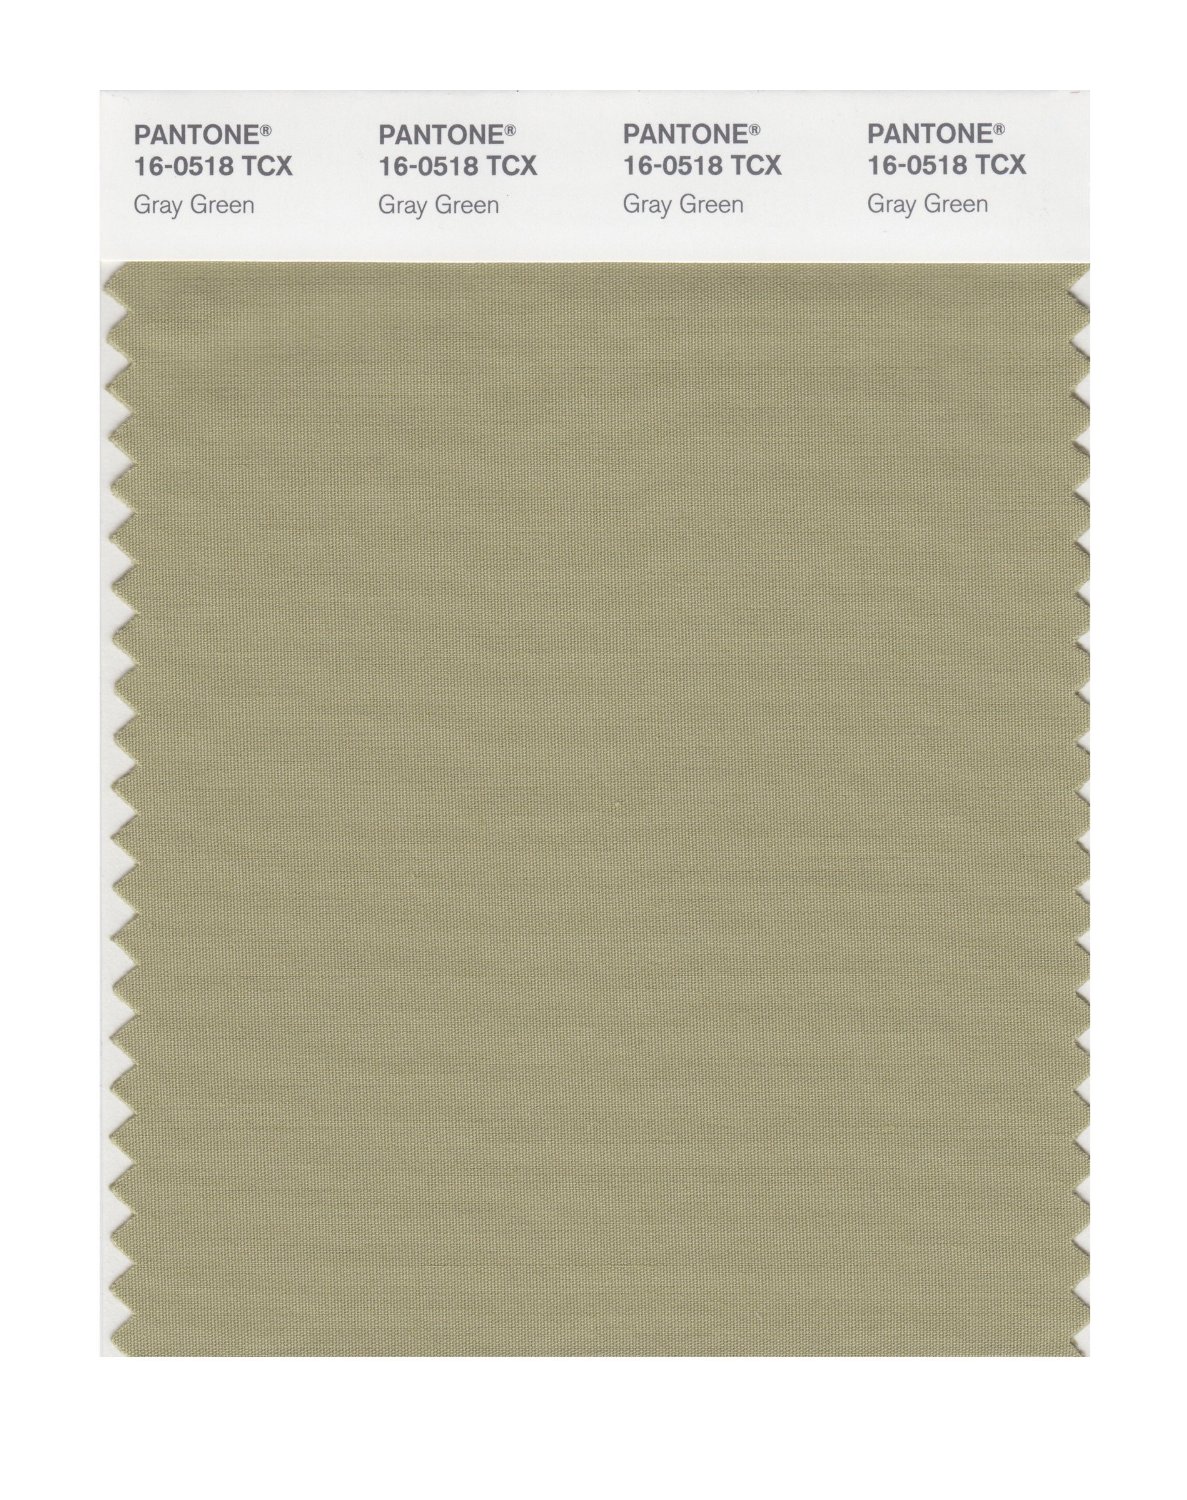 Pantone Cotton Swatch 16-0518 Gray Green